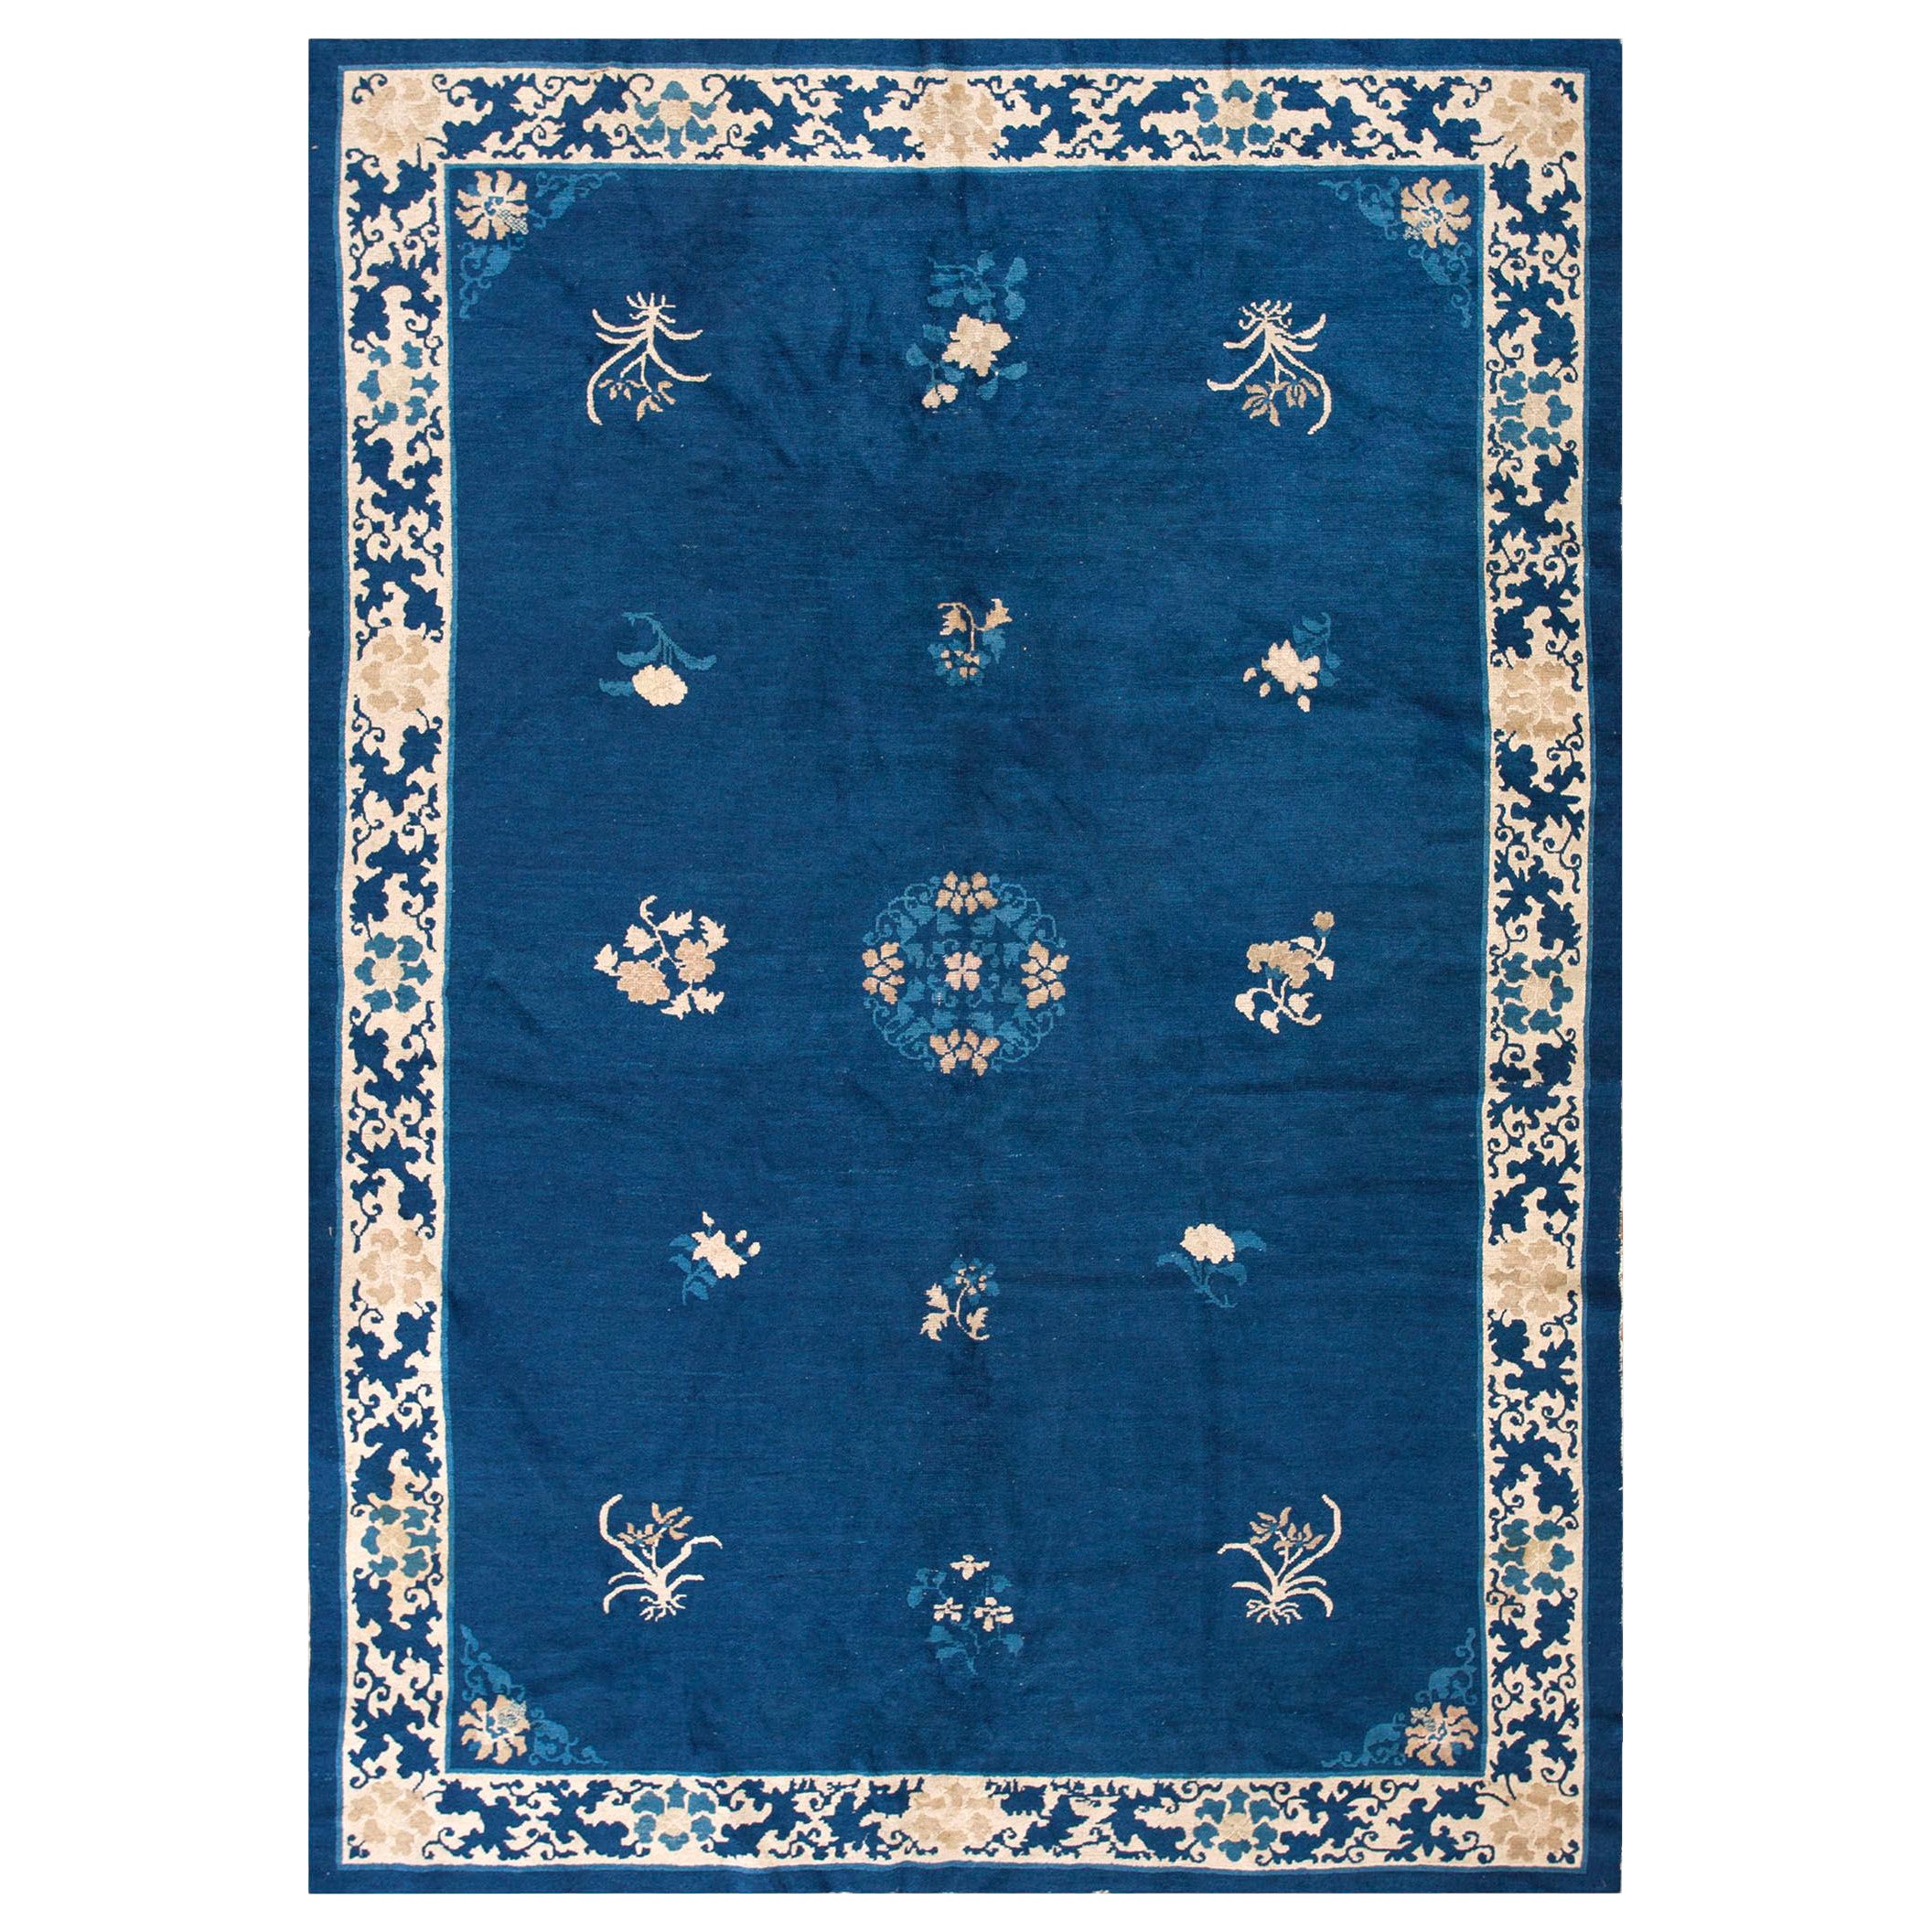 Early 20th Century Chinese Peking Carpet ( 6'2"x 8'9" - 188 x 267 )